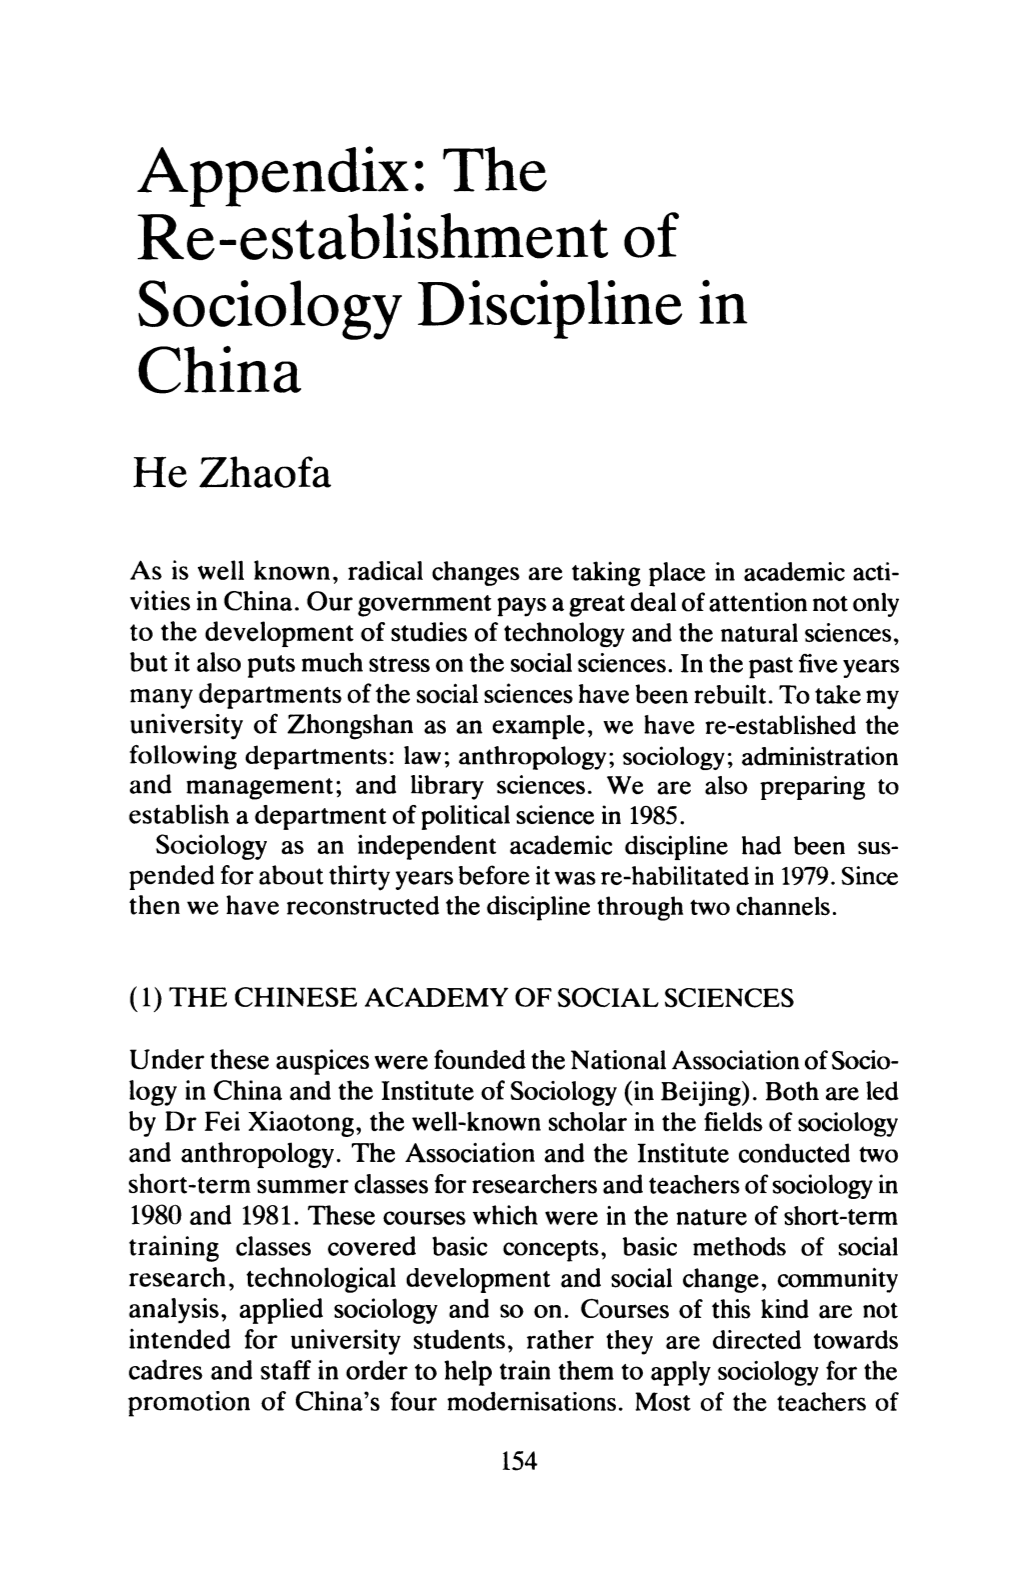 Appendix: the Re-Establishment of Sociology Discipline in China